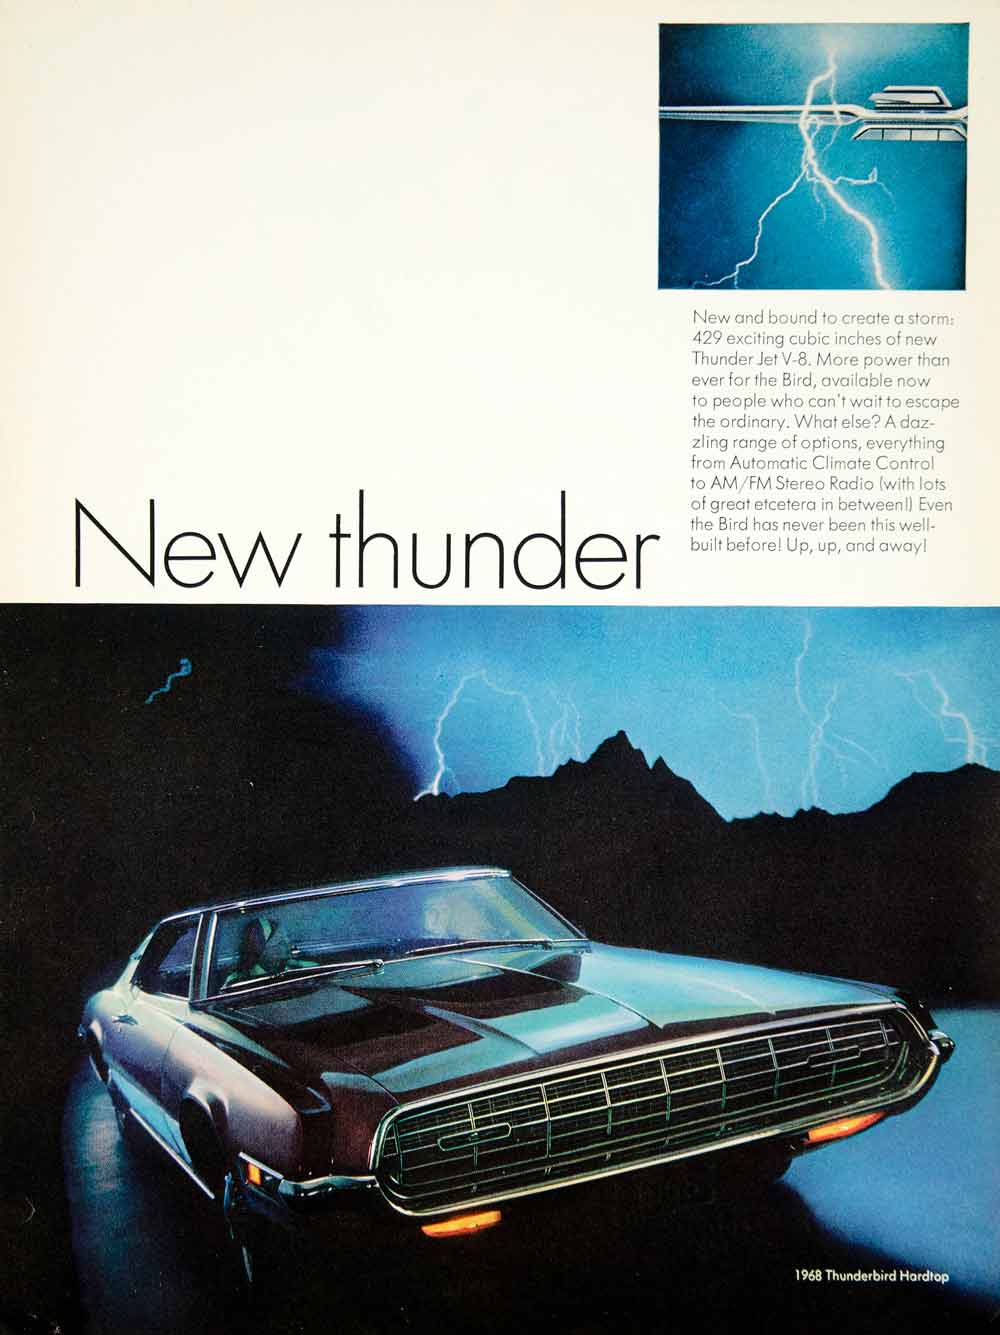 1967 Ad 1968 Ford Thunderbird Hardtop Car Automobile Classic Four-Door YMMA3